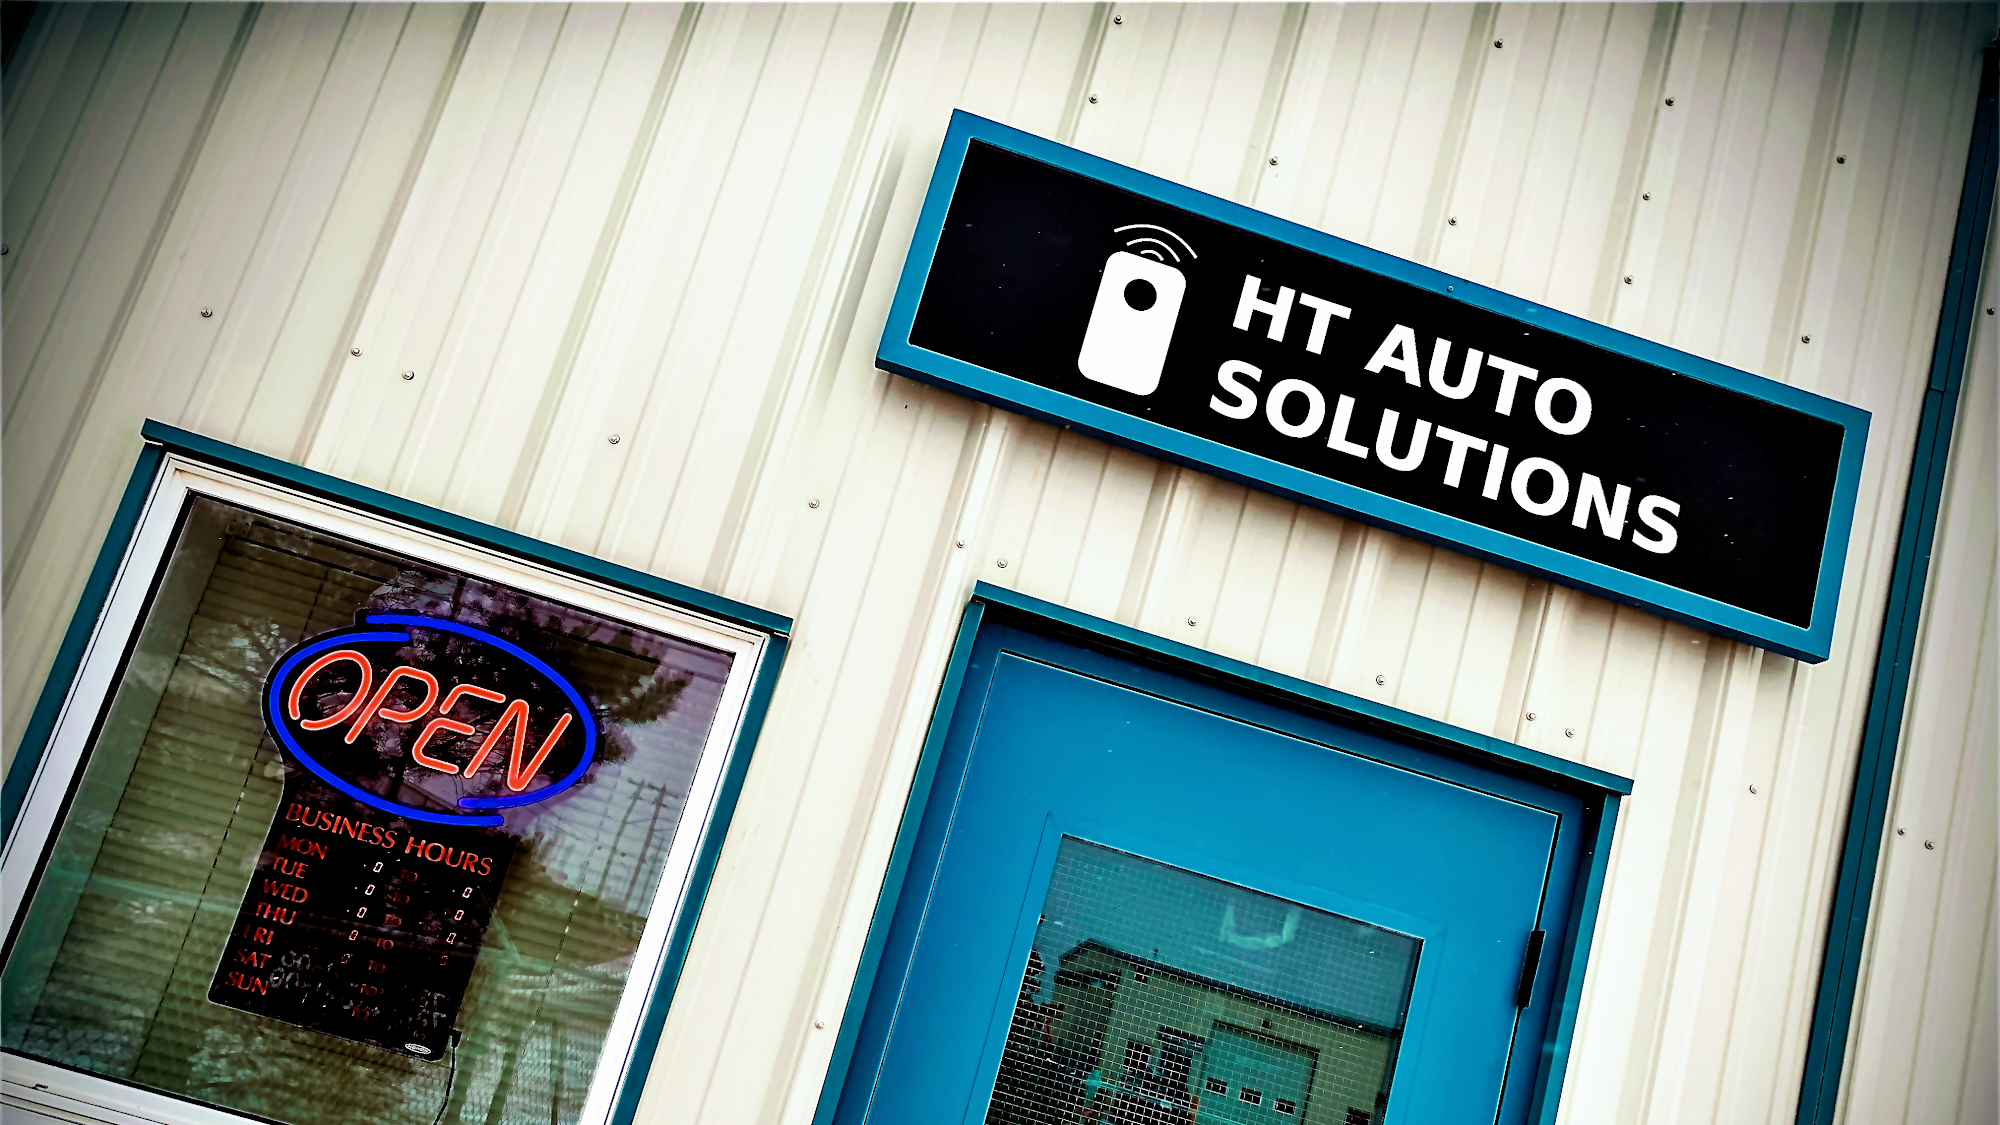 HT Auto Solutions Inc.